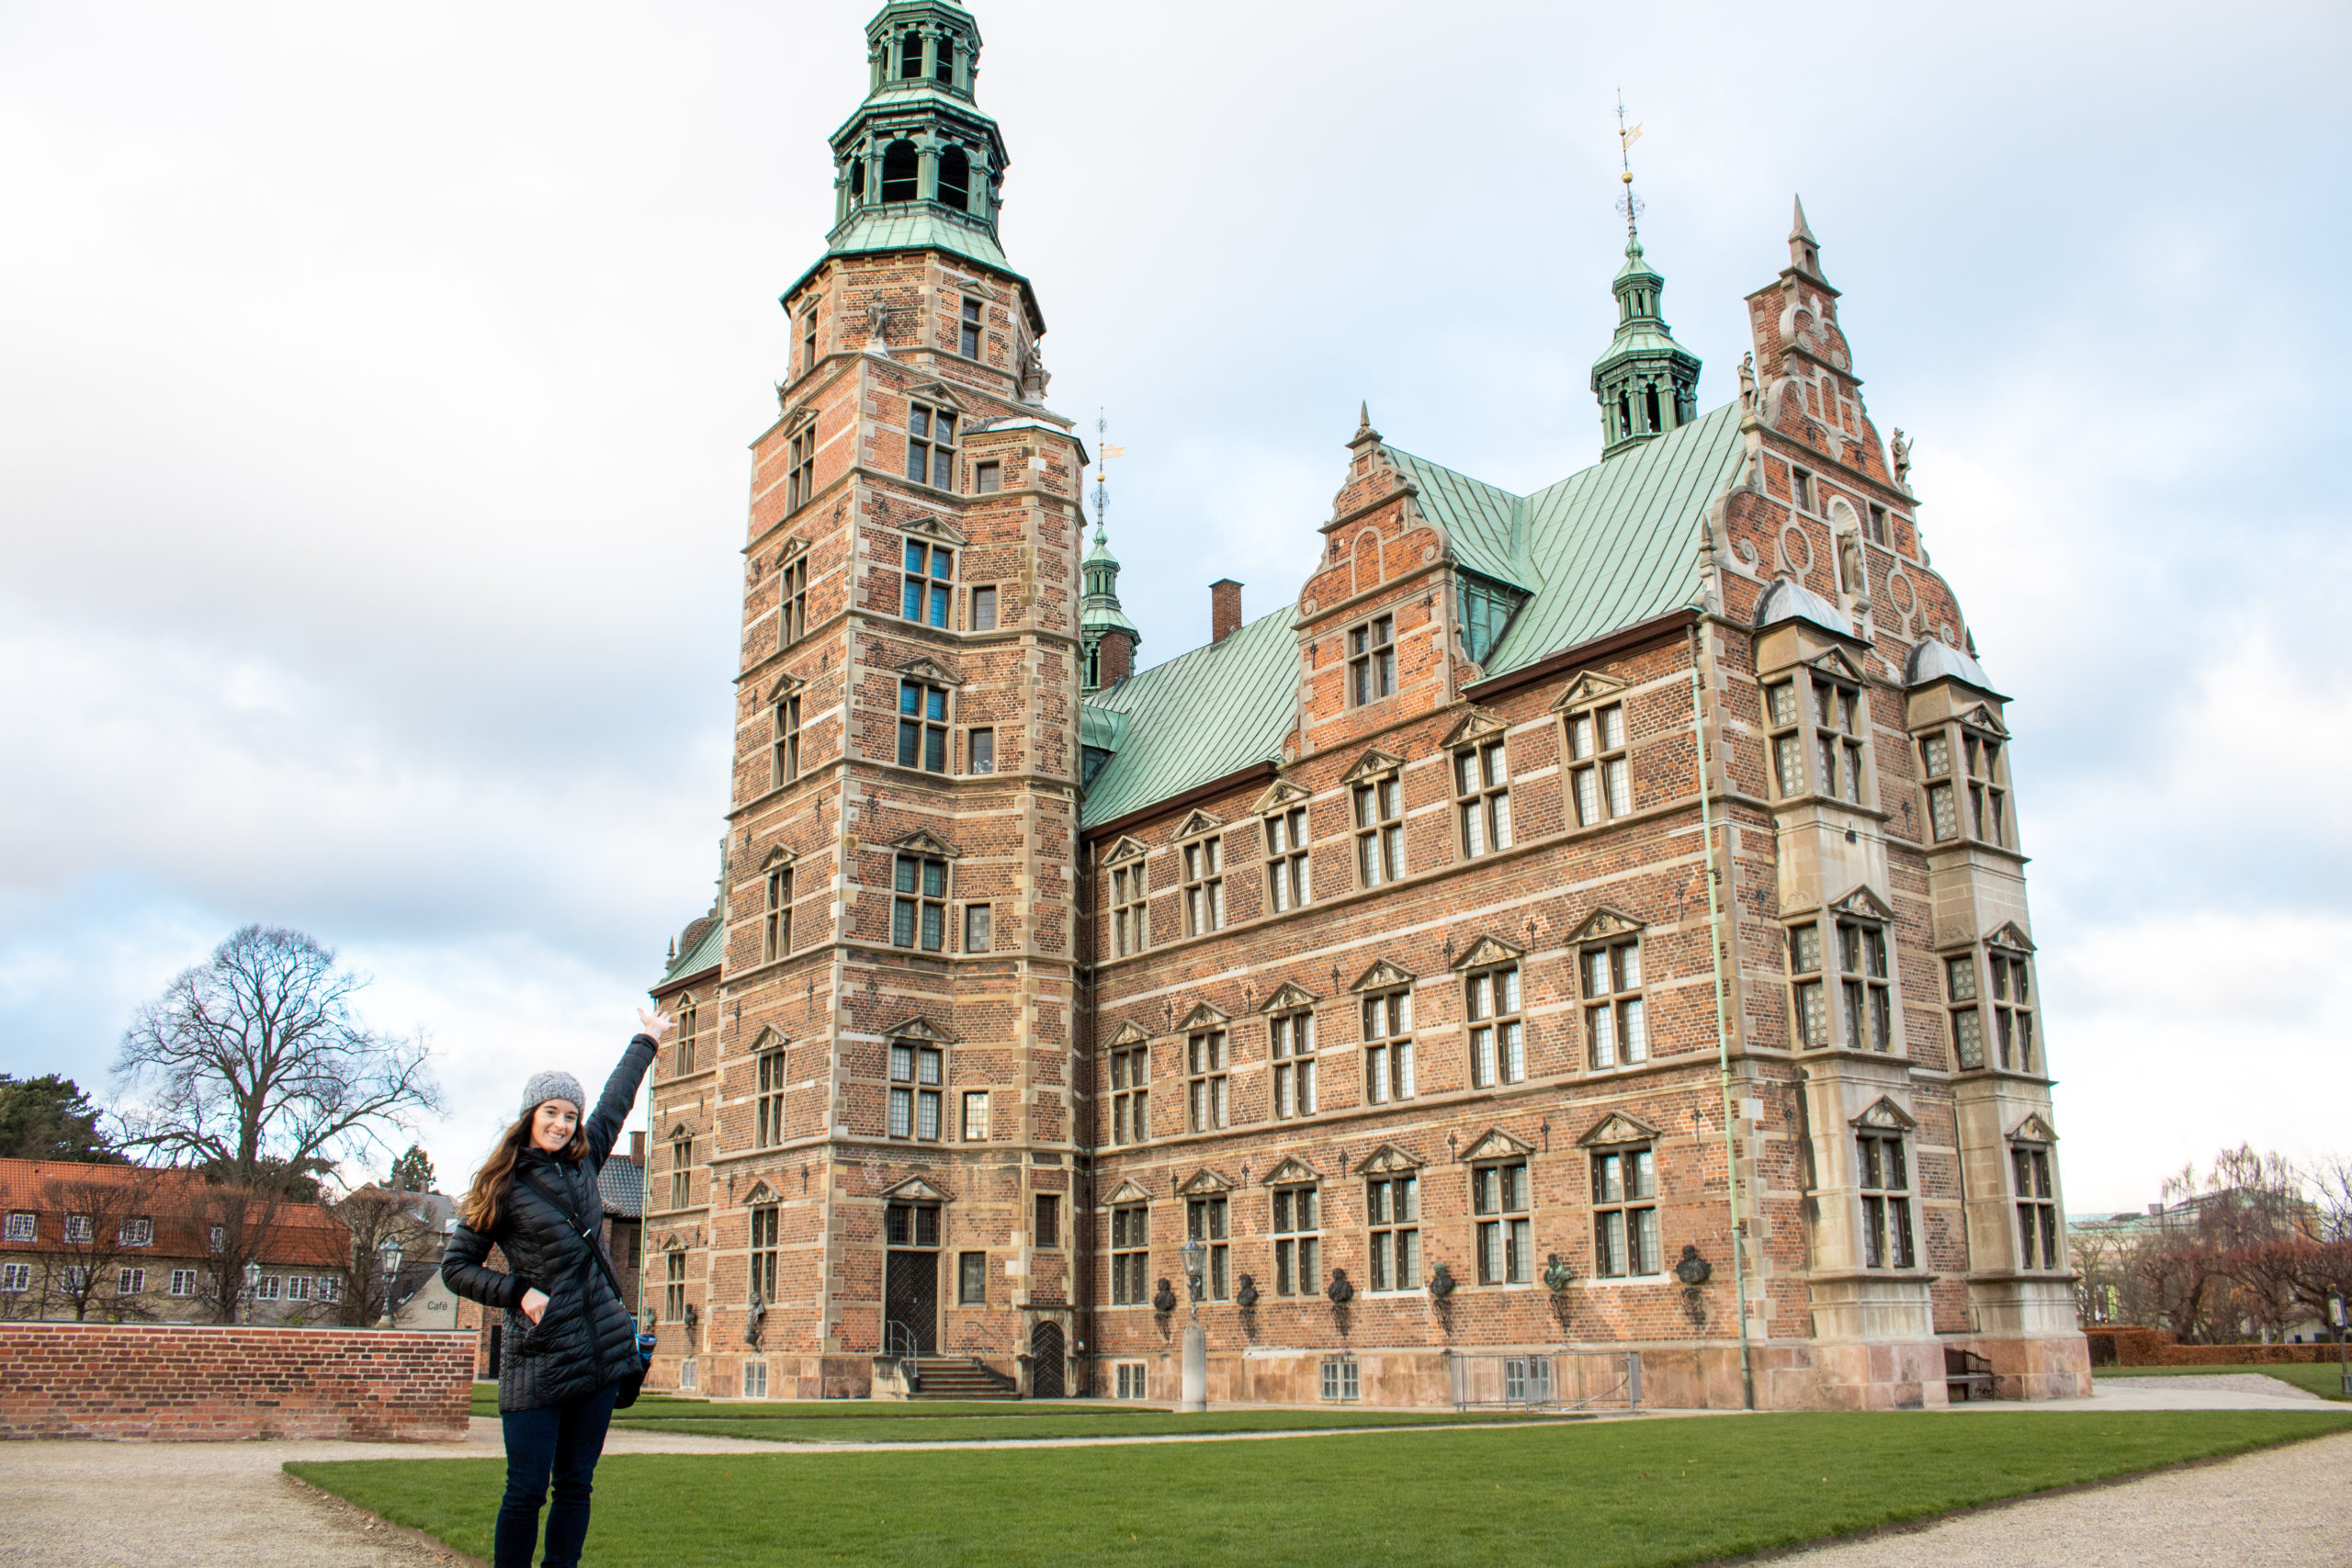 Picture in front of Rosenborg Castle in Denmark